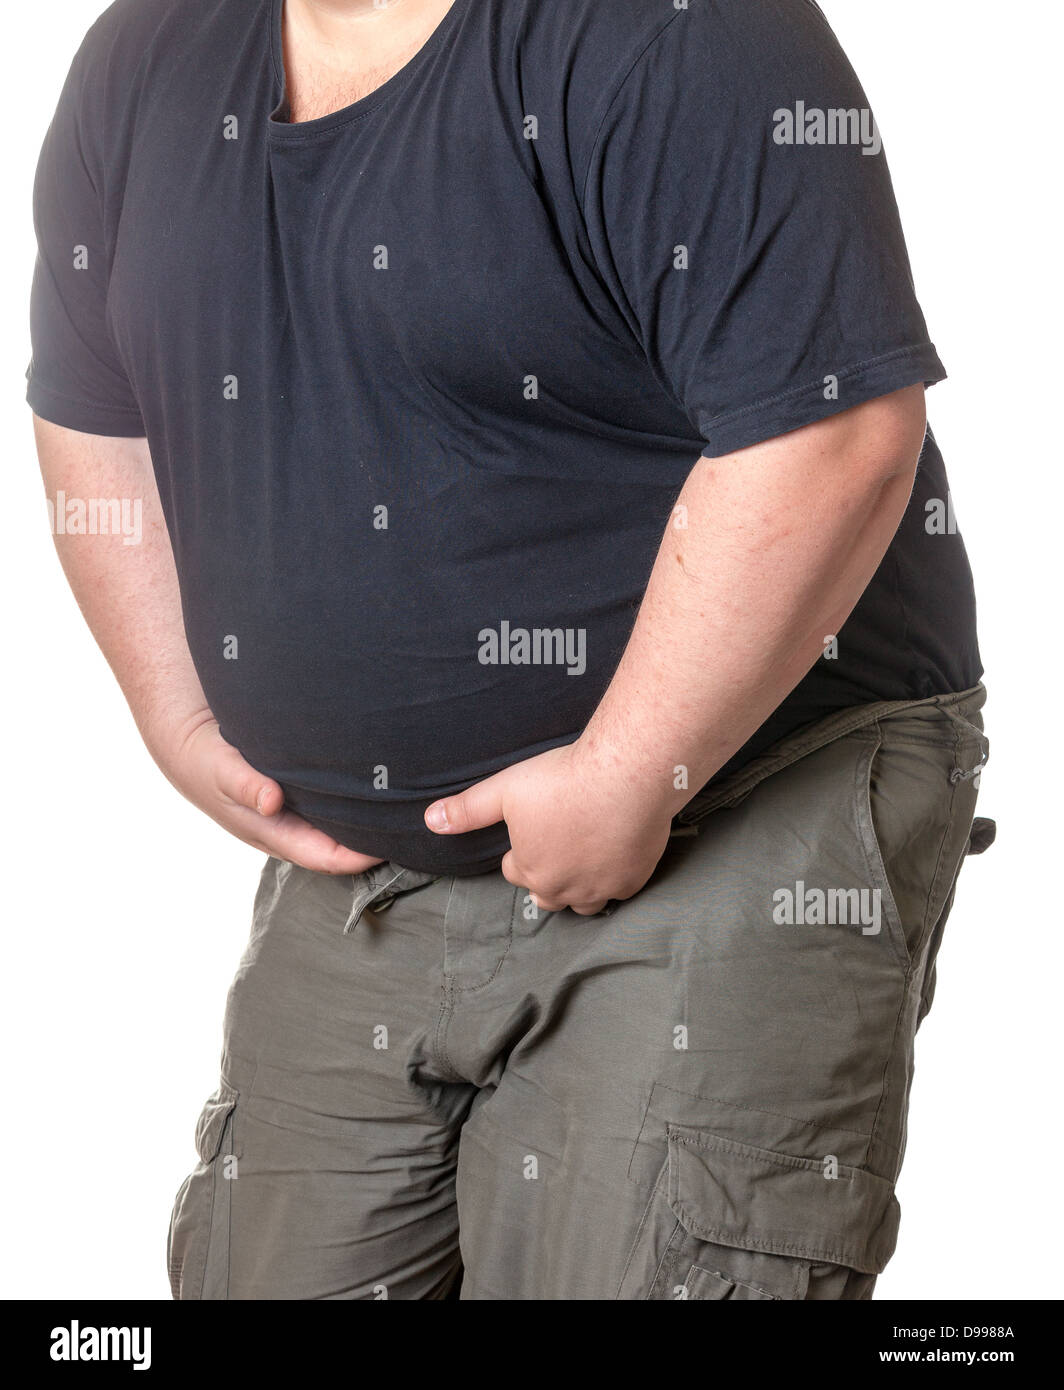 Fat Man con una prominente barriga, cerca de la parte del cuerpo Foto de stock